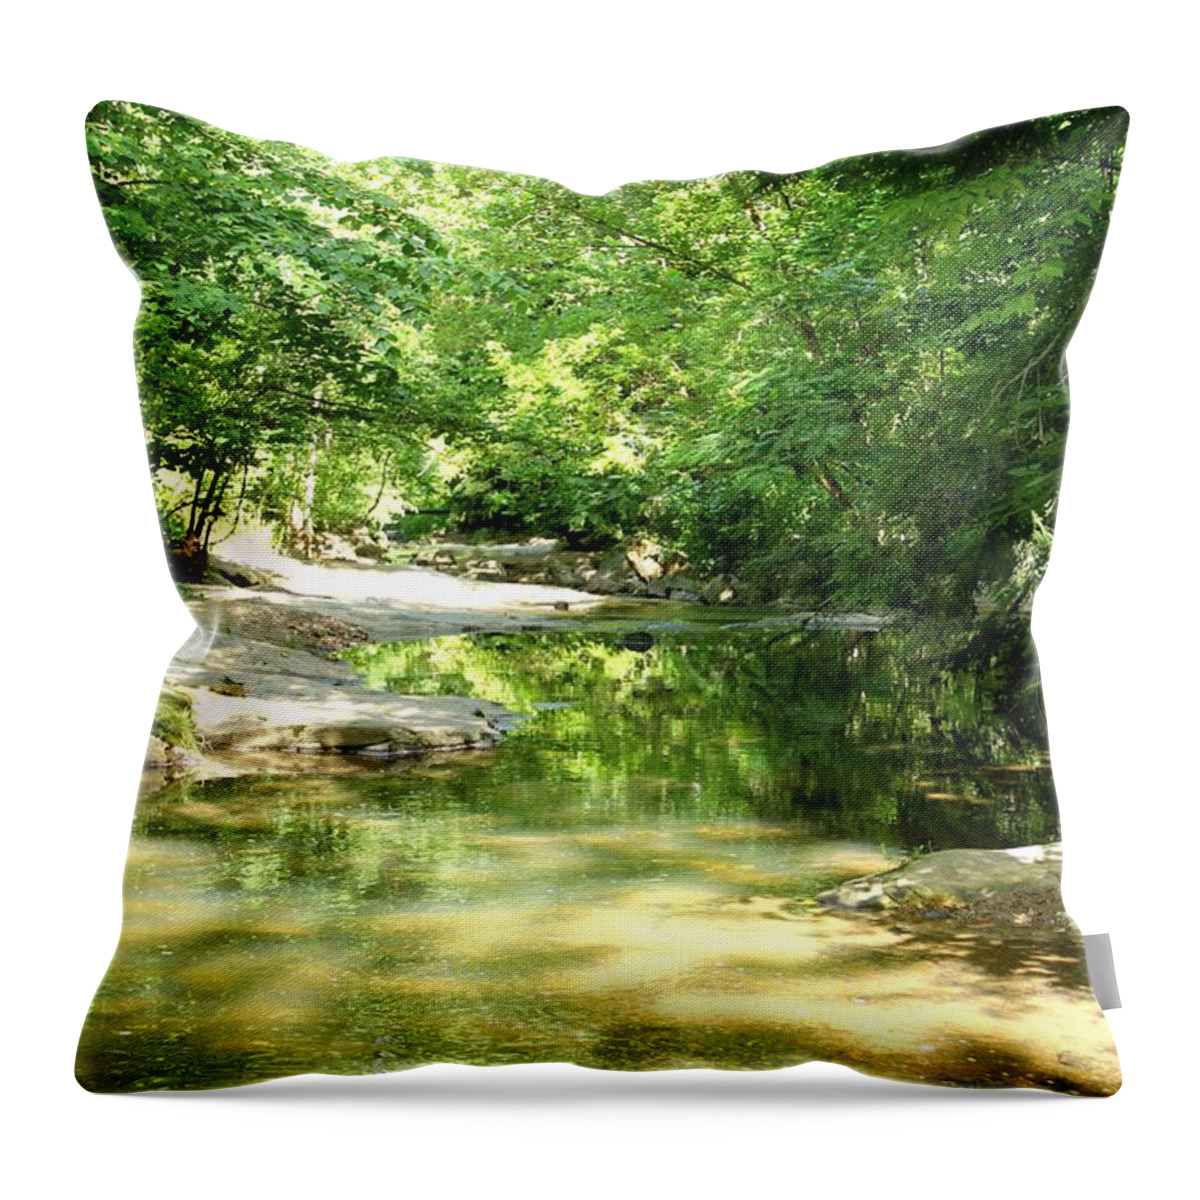 Stream Throw Pillow featuring the photograph Botanical Gardens Stream by Allen Nice-Webb